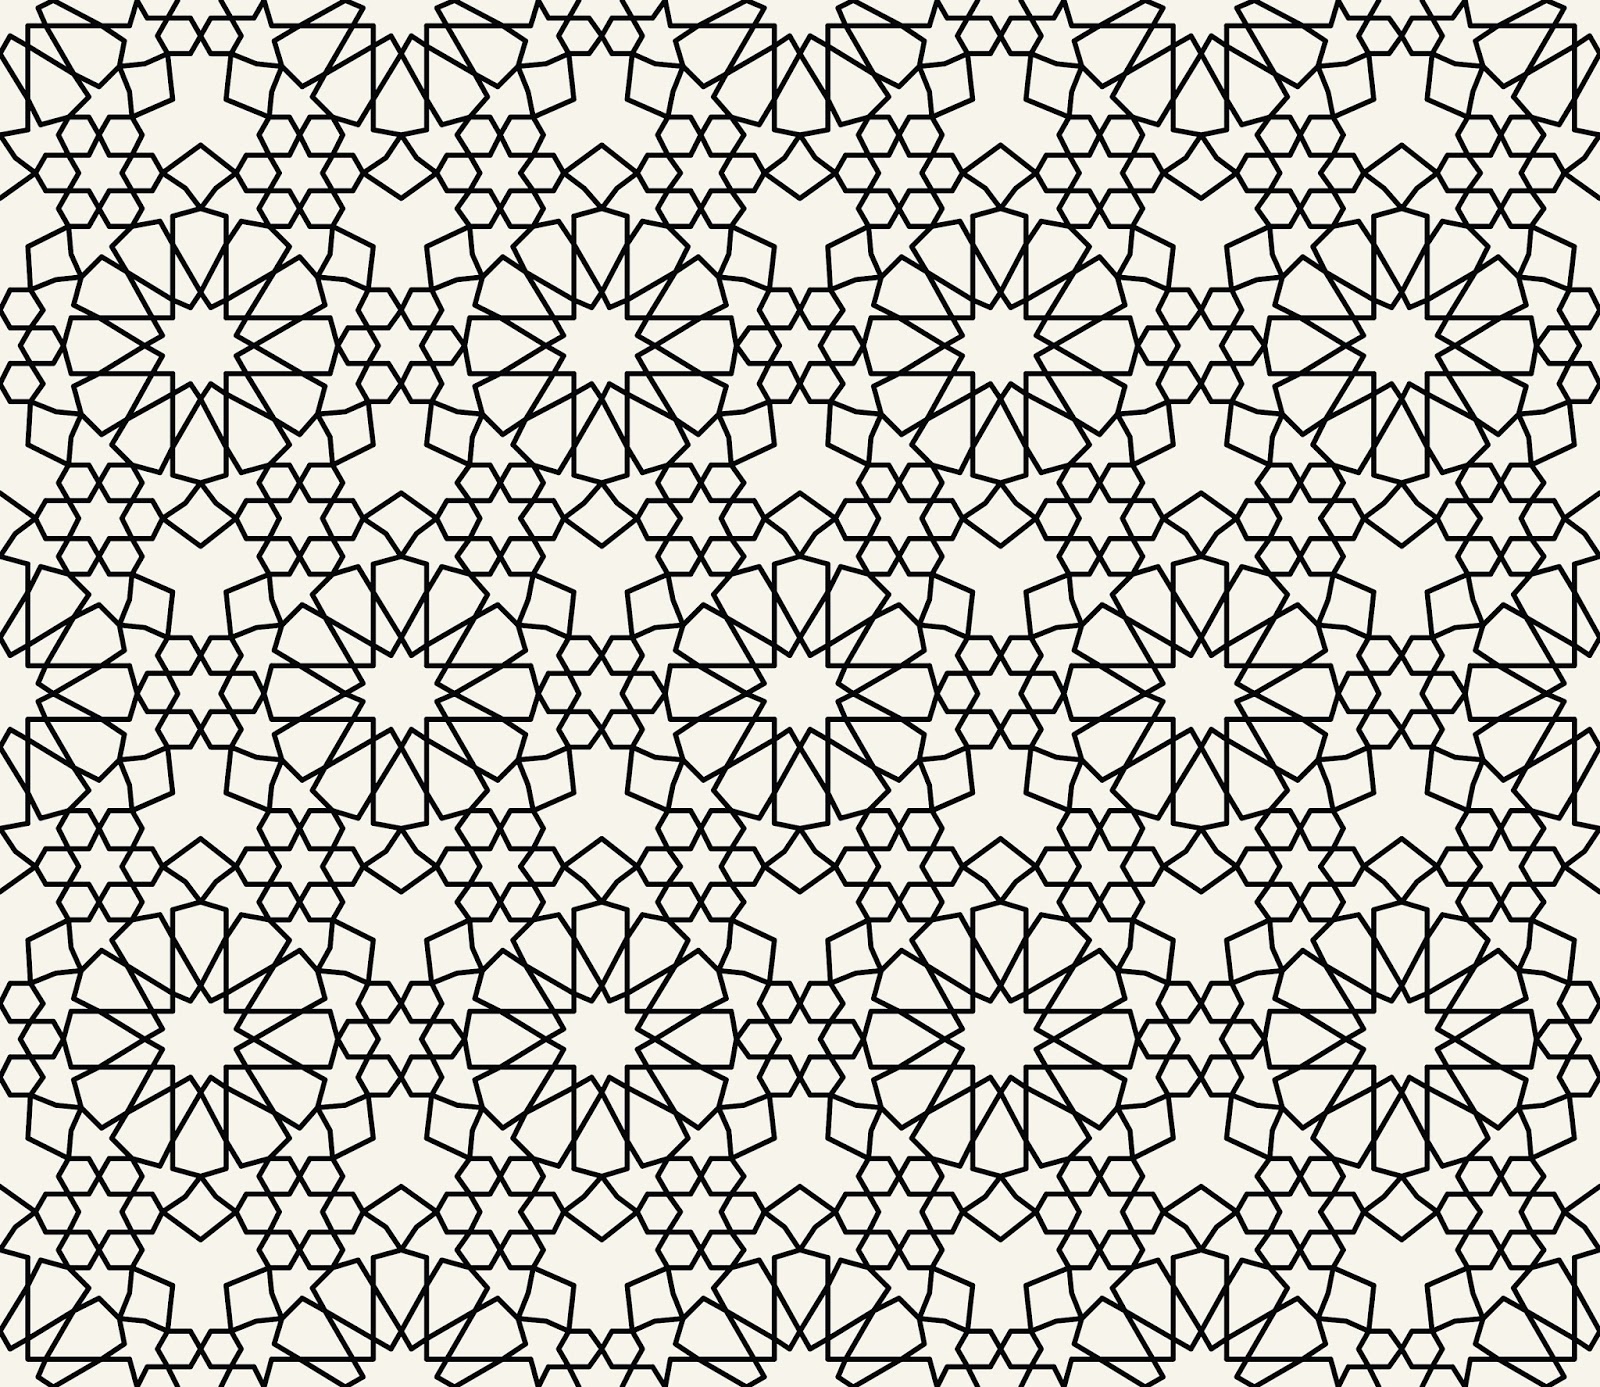  Islamic  inspired pattern  vector  Free Pattern  Vectors